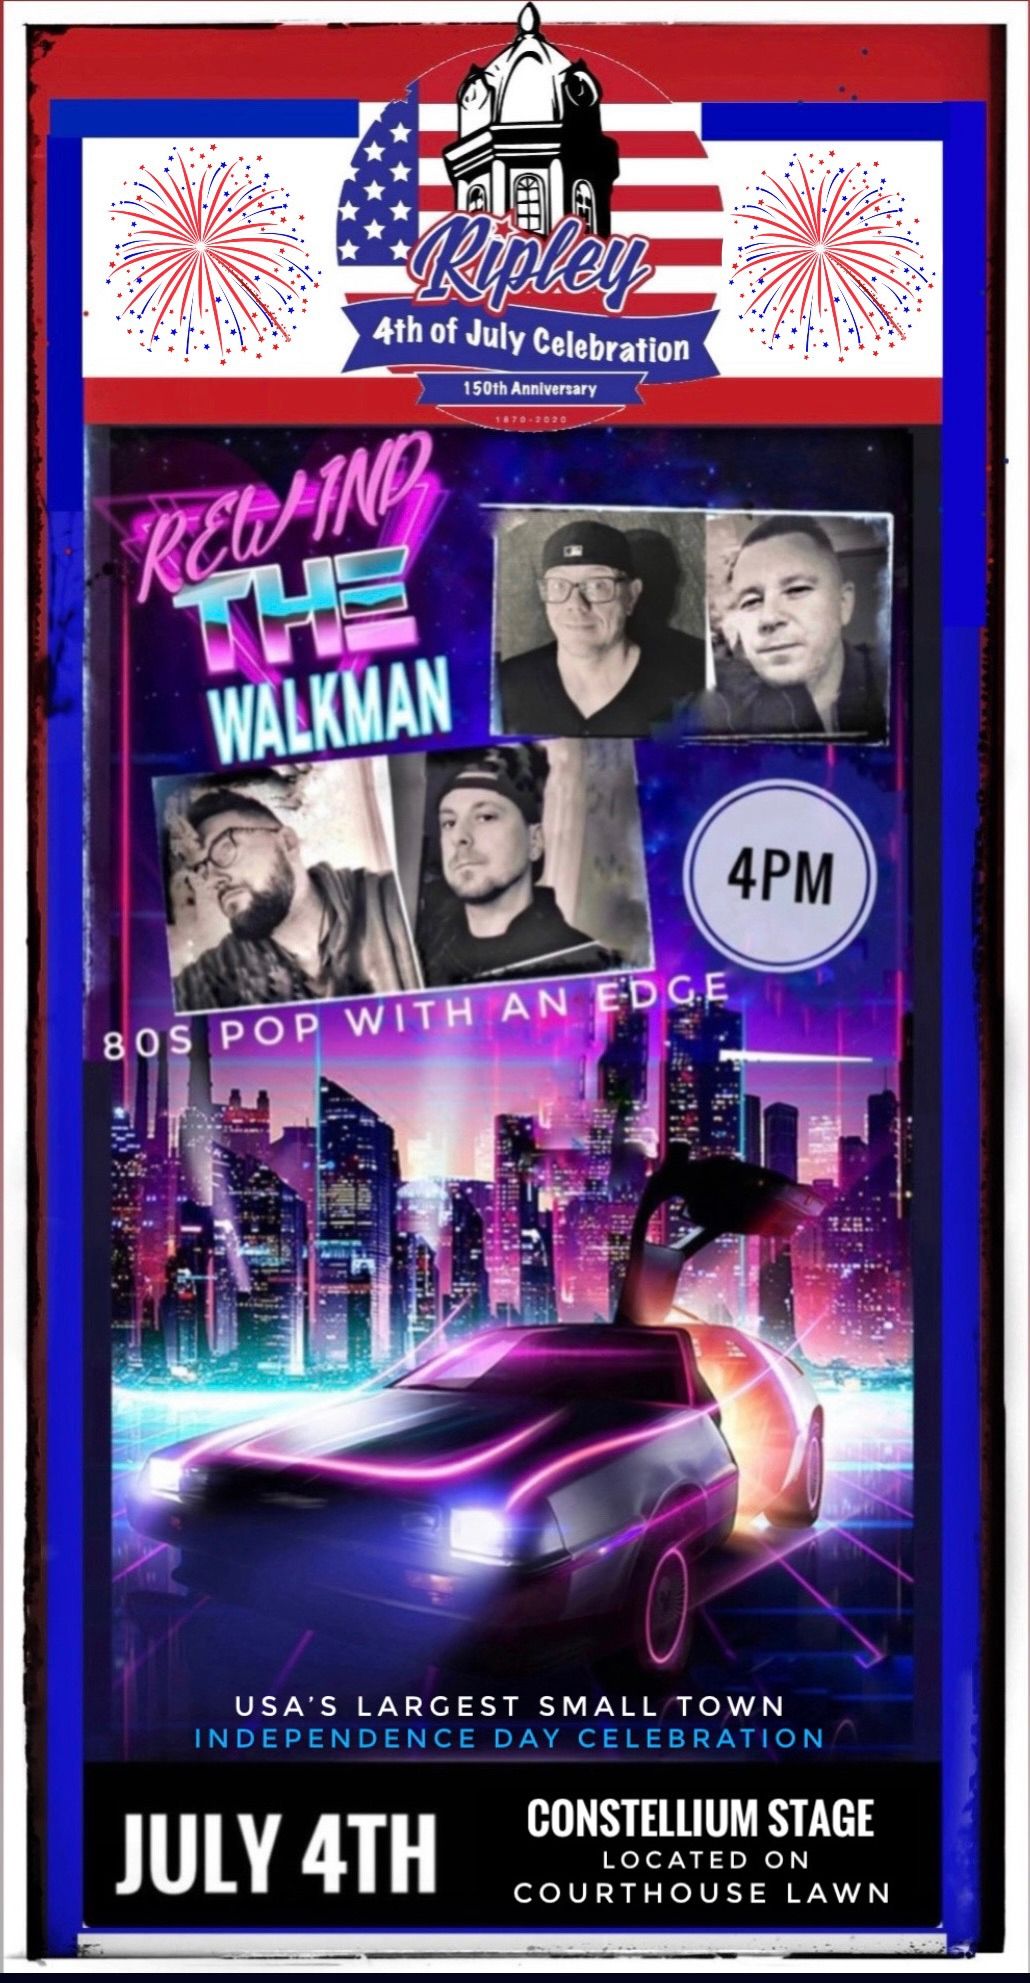 Rewind The Walkman @ Ripley 4th Of July Celebration 